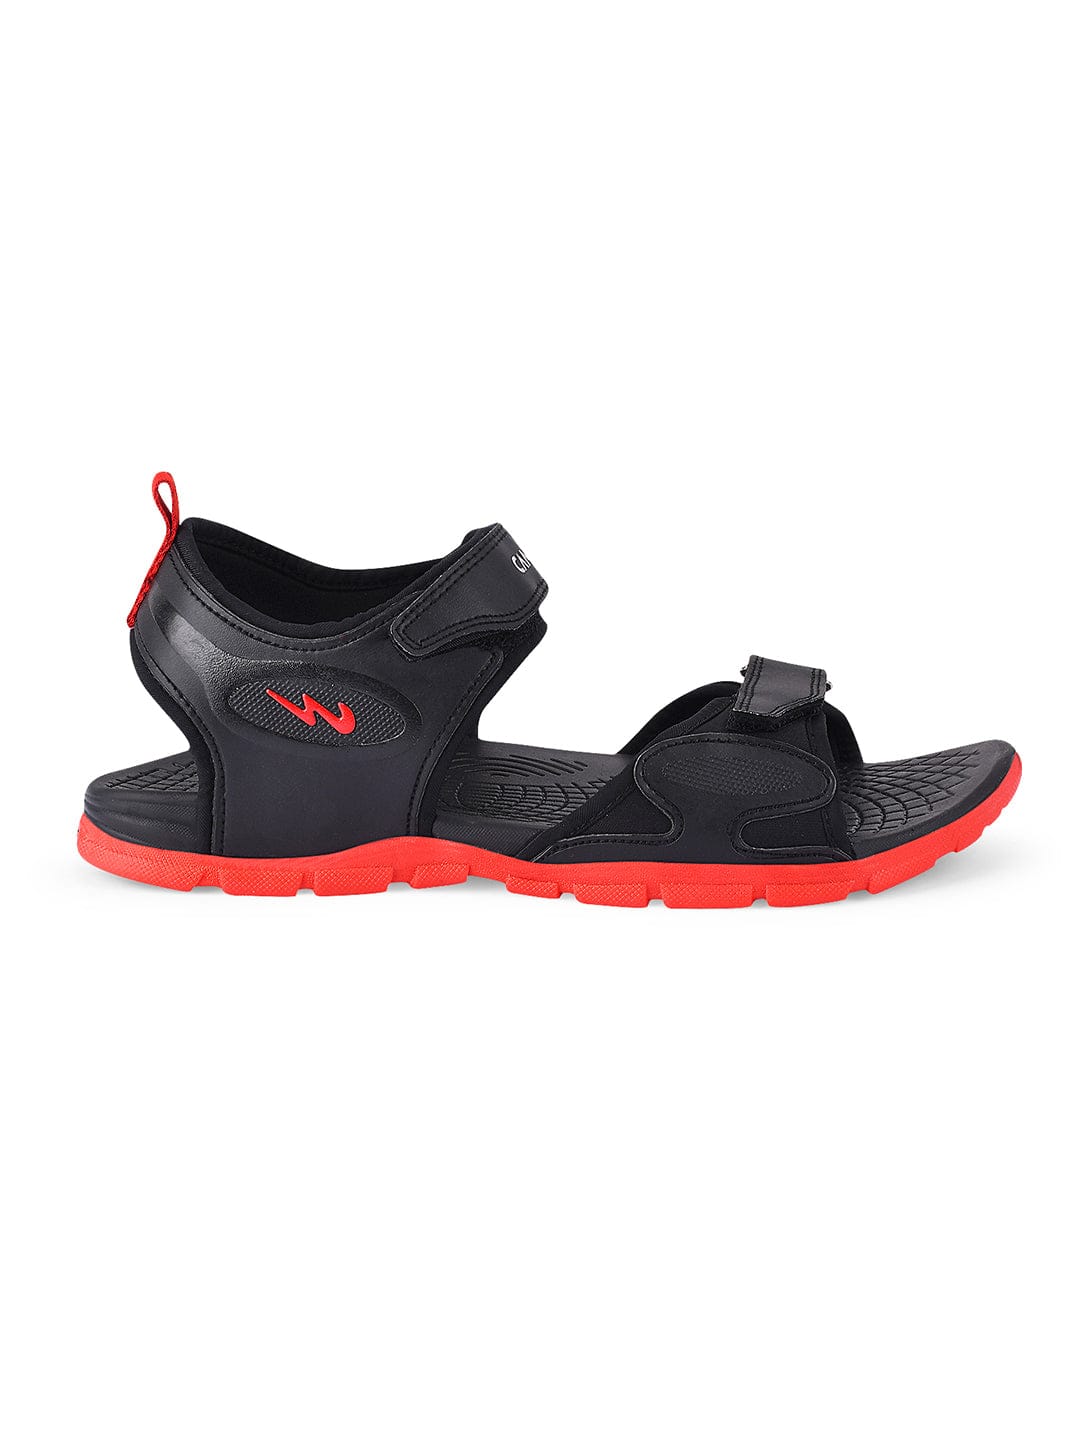 Buy Sandals For Men: Jazzy-3K-514Rst-Beig799 | Campus Shoes